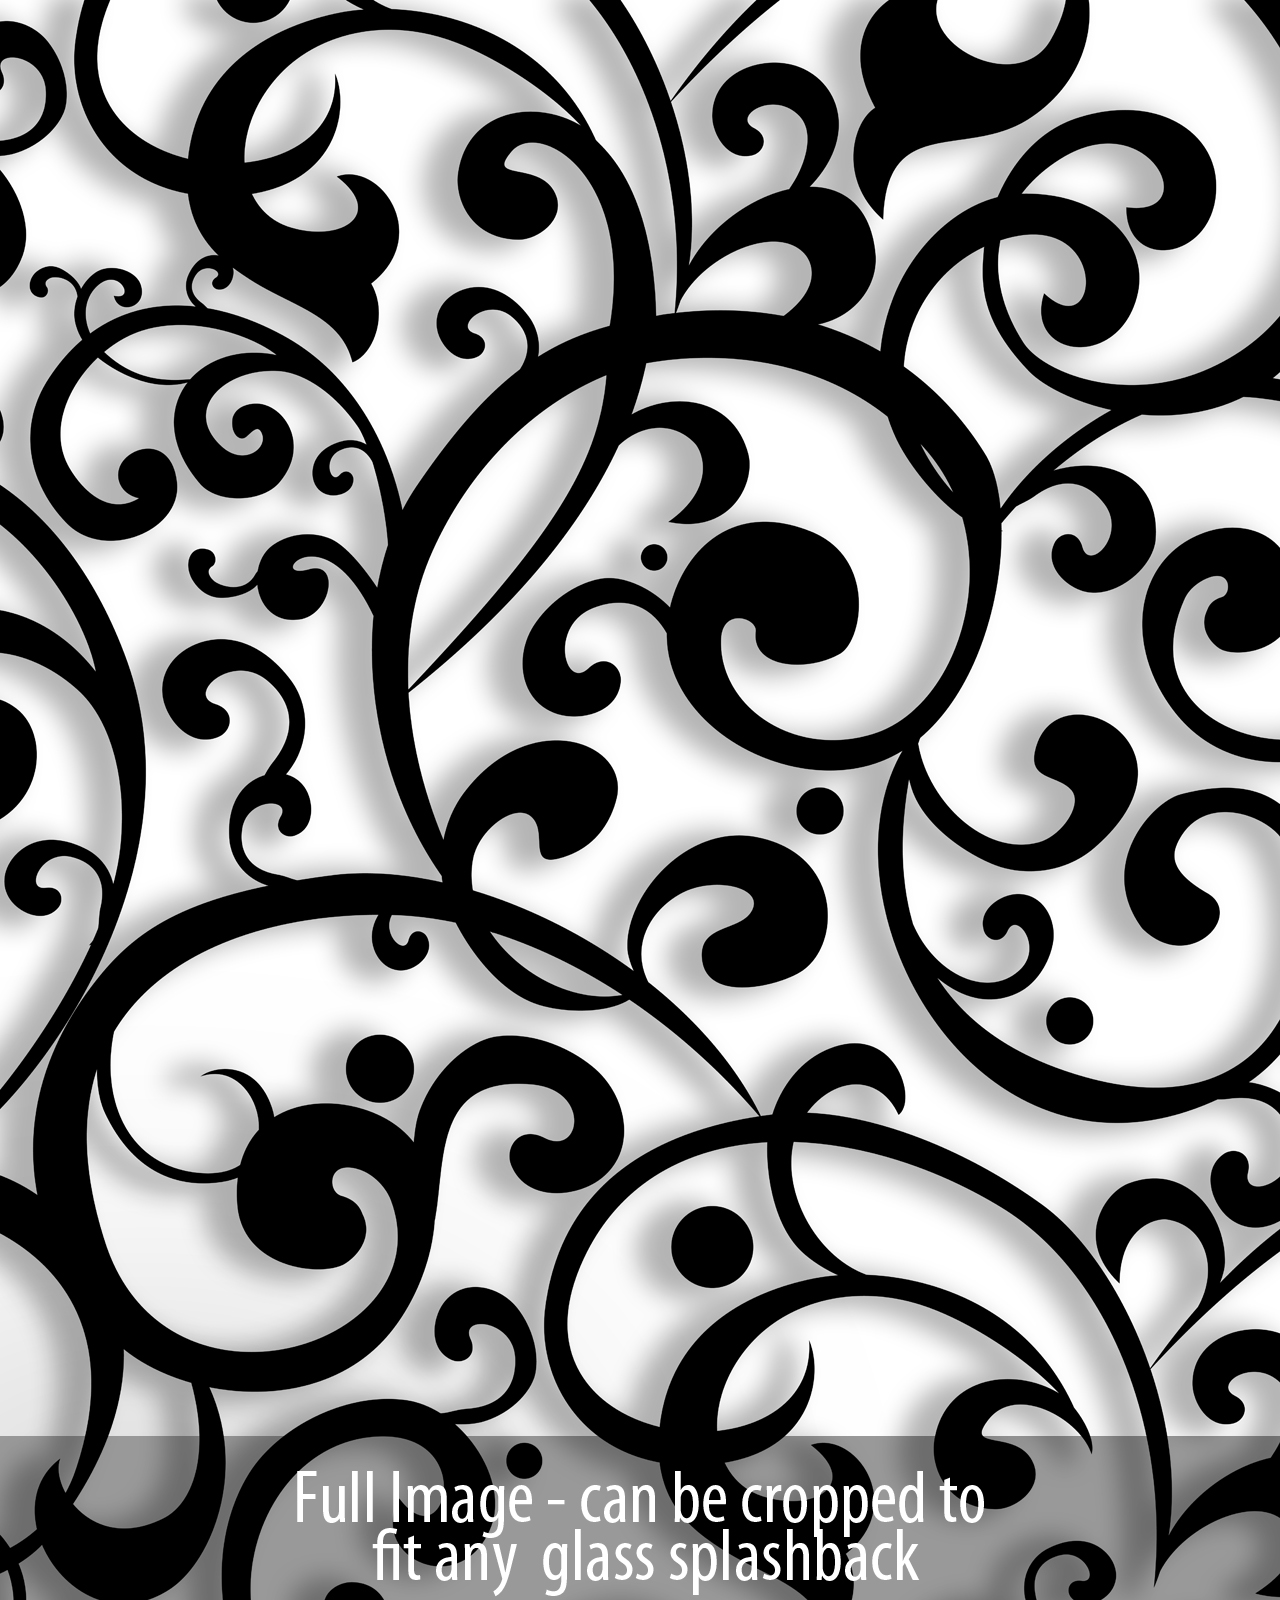 Swirl Patterns and Designs